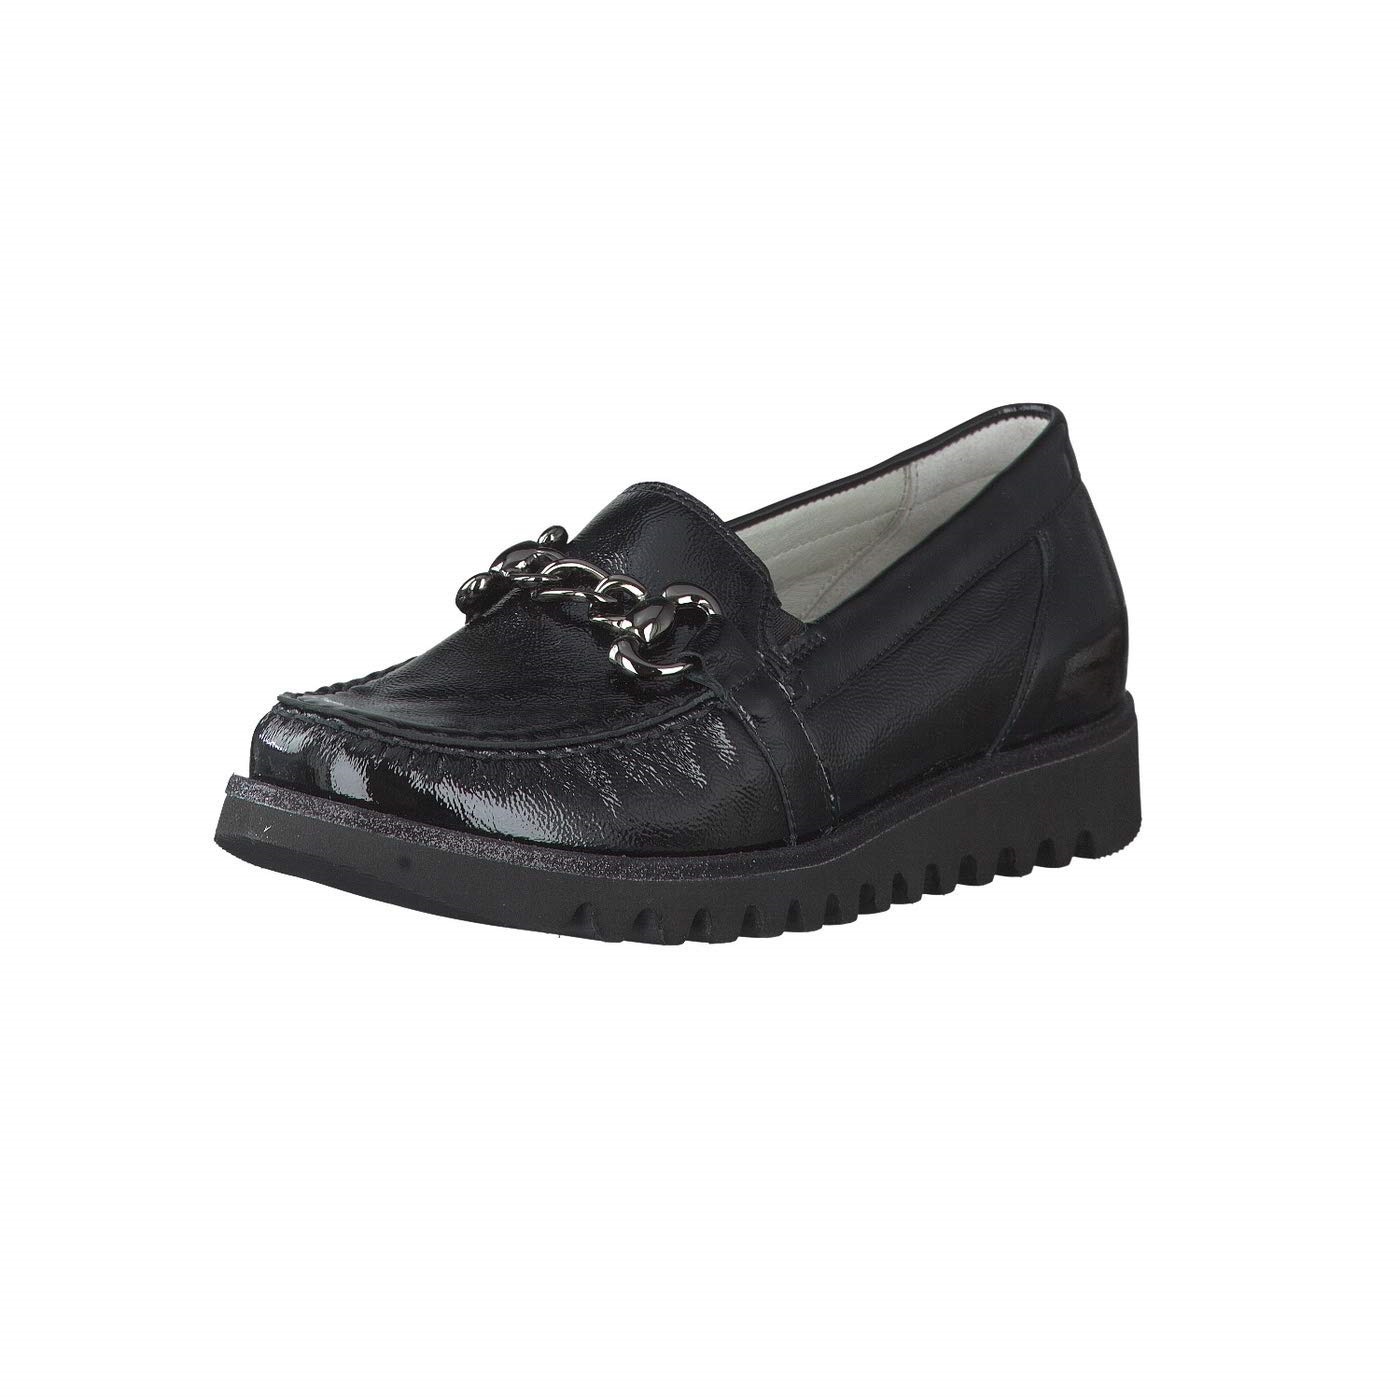 Women's Waldlaufer Habea 926509 143 Patent Leather Moccasin Shoes ...